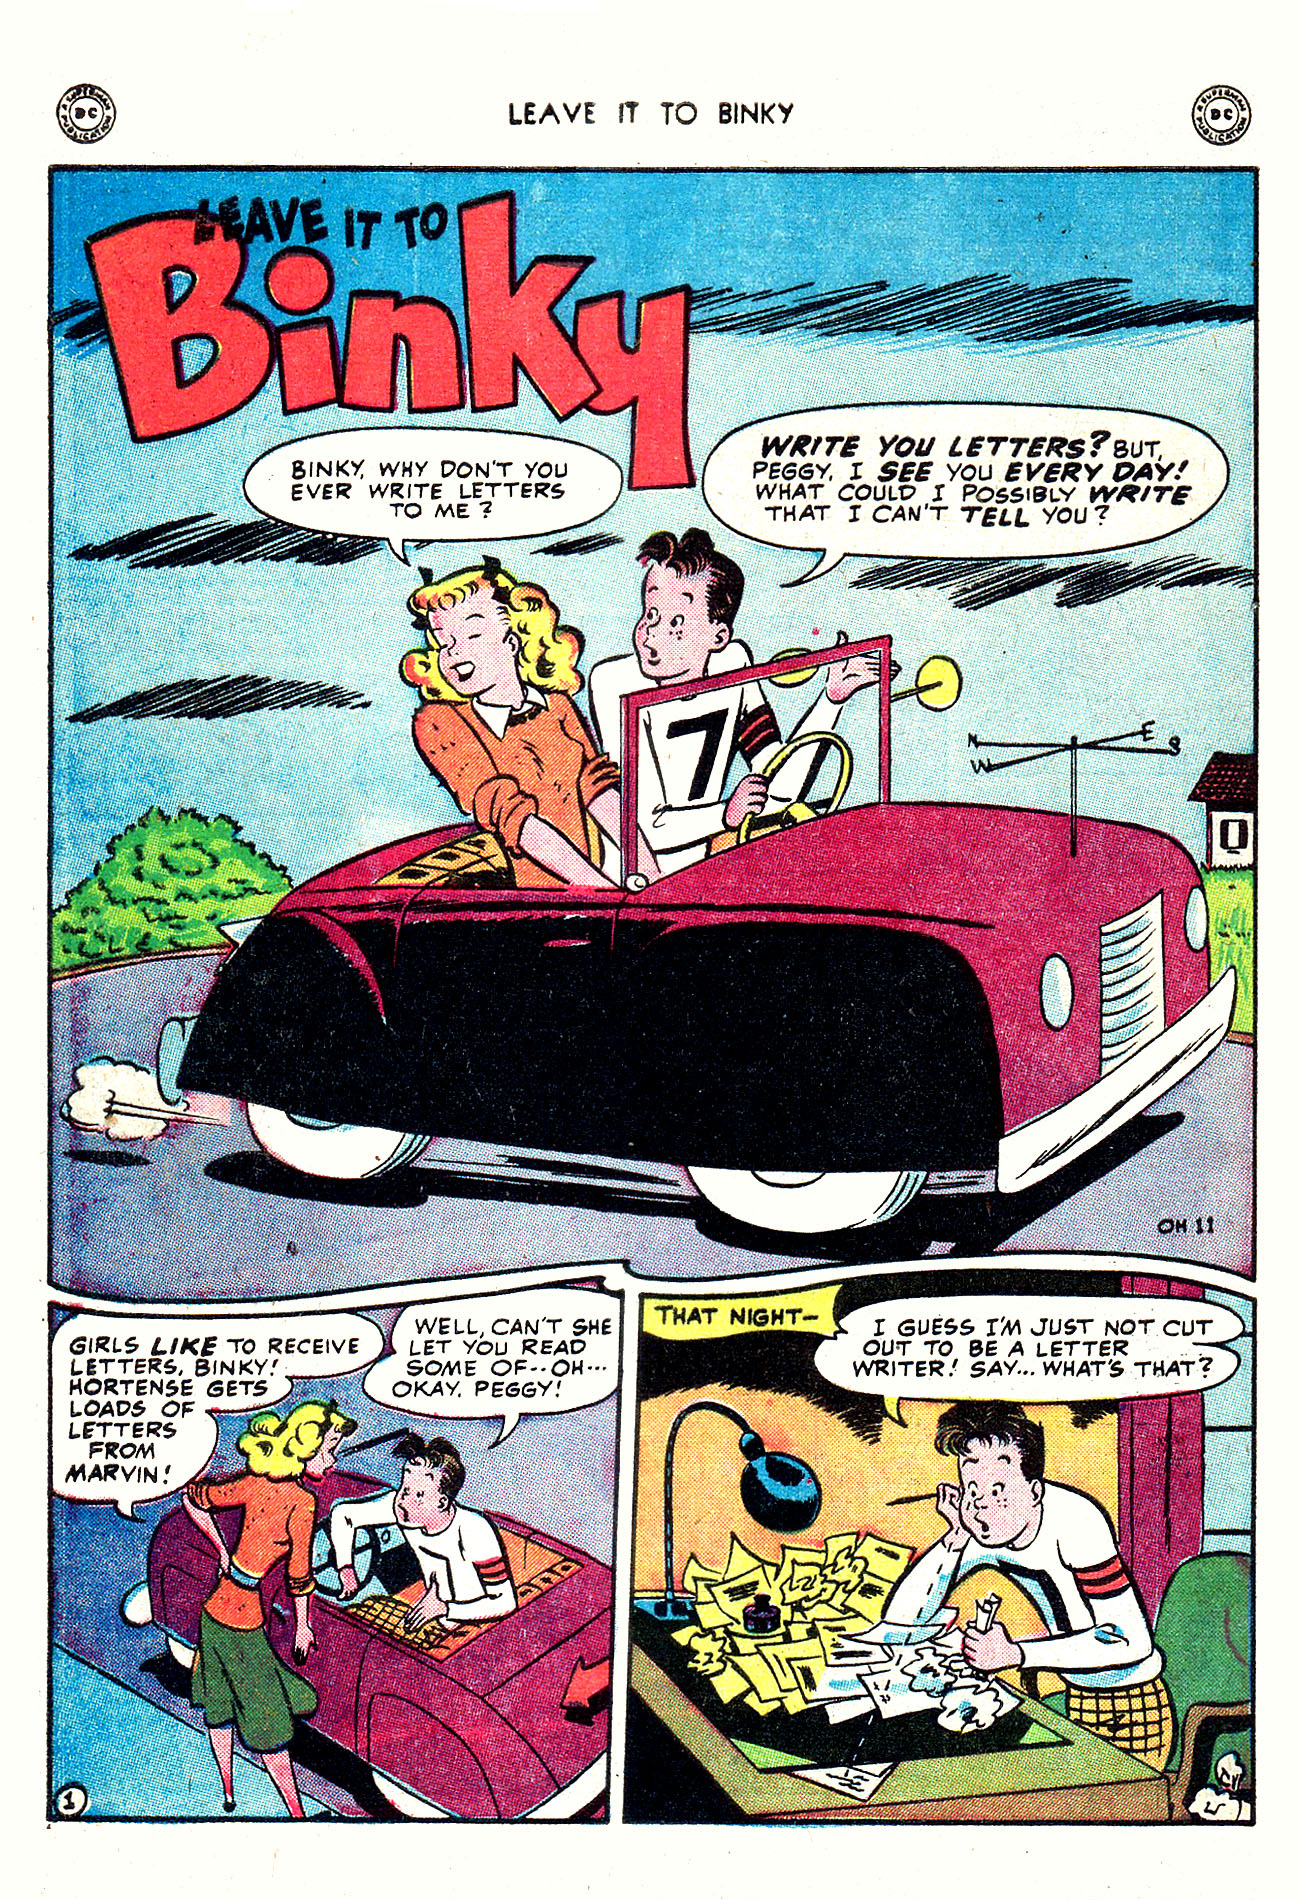 Read online Leave it to Binky comic -  Issue #6 - 40